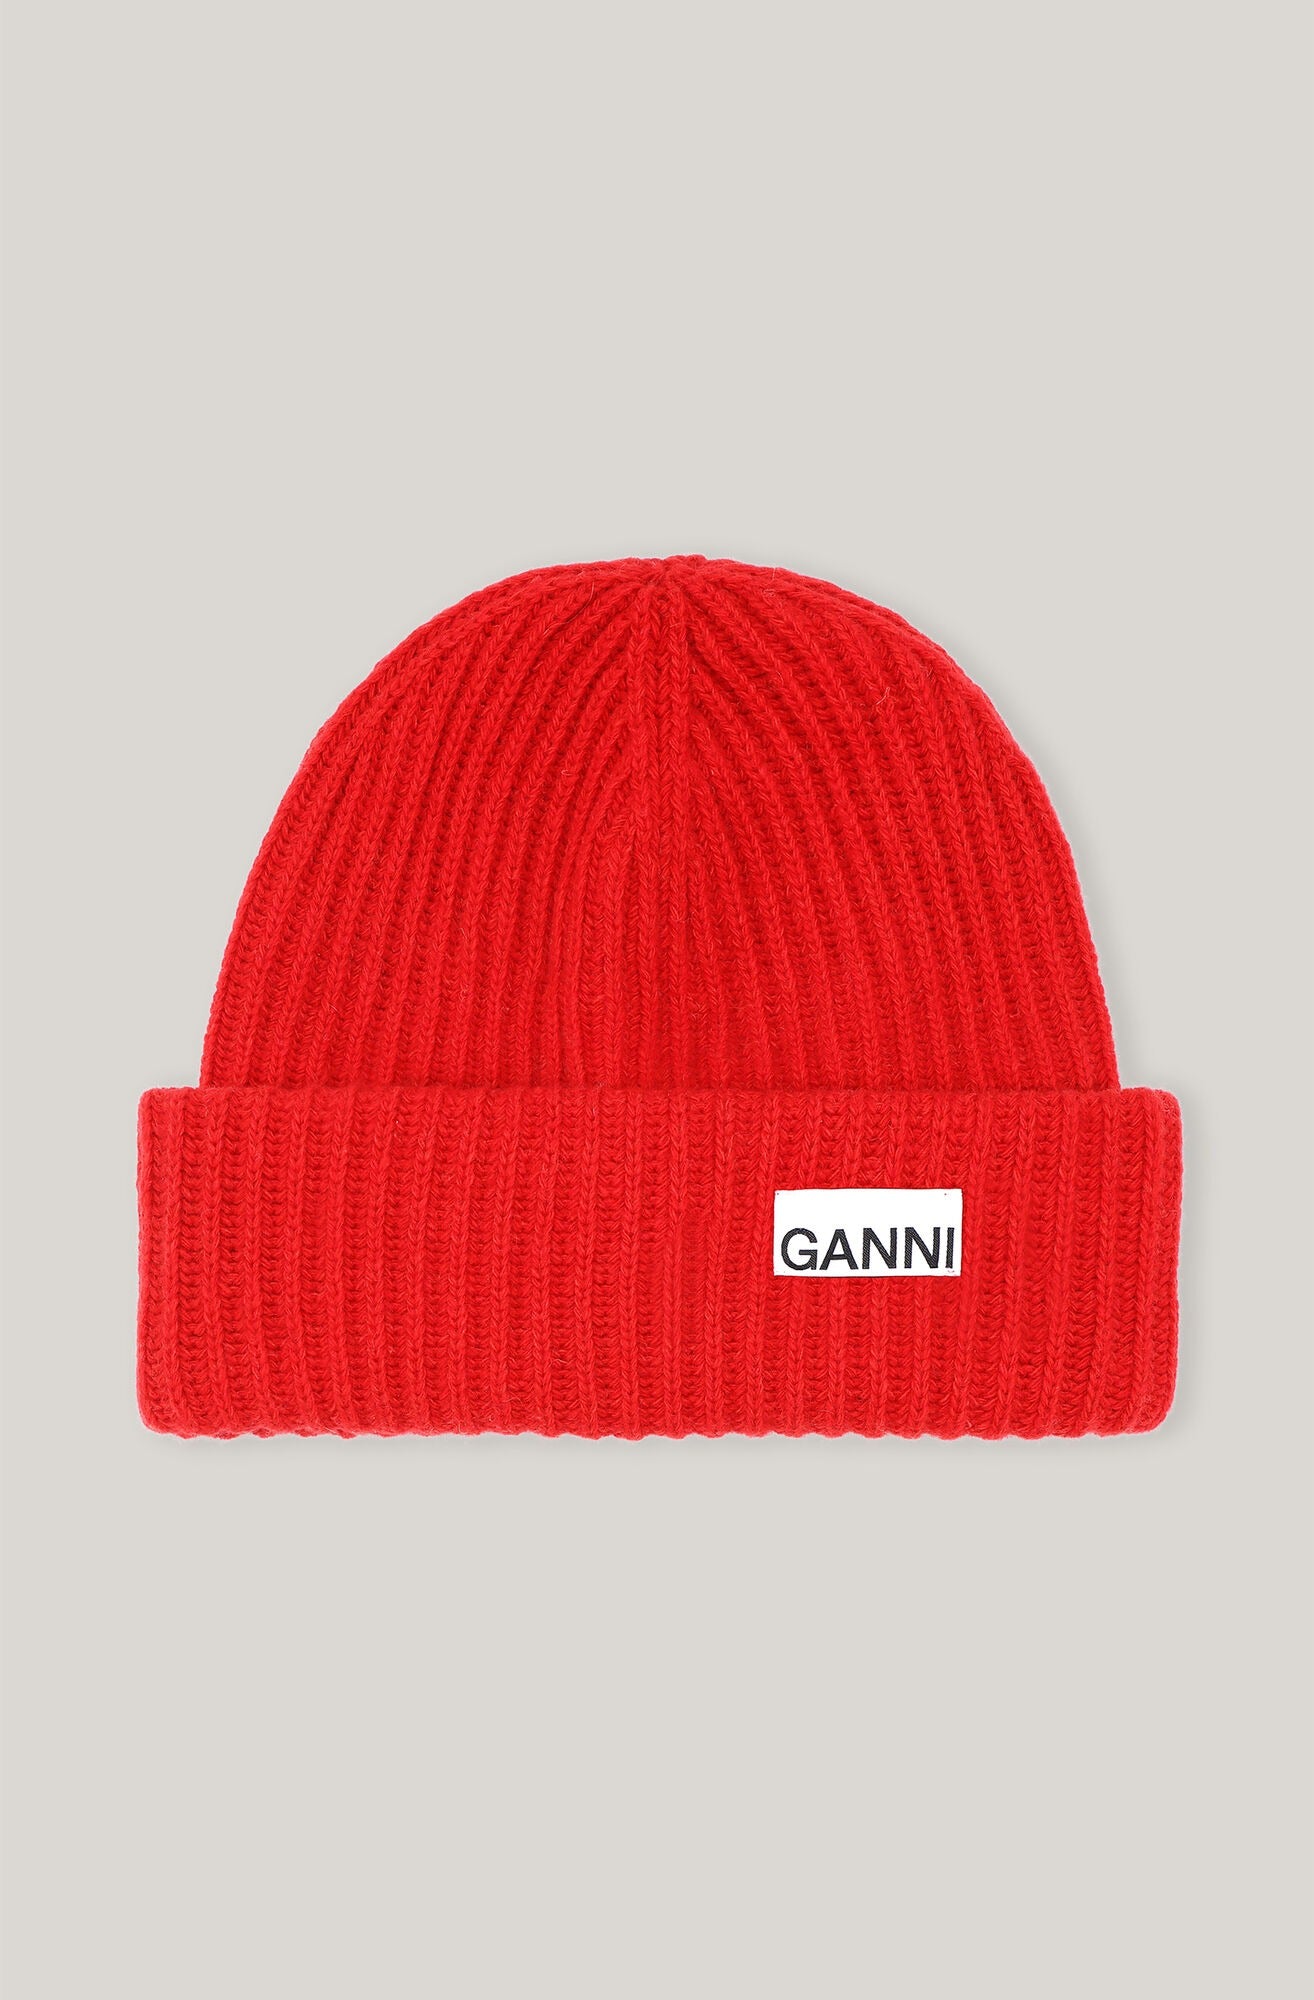 Ganni A4139 red wool beanie hat